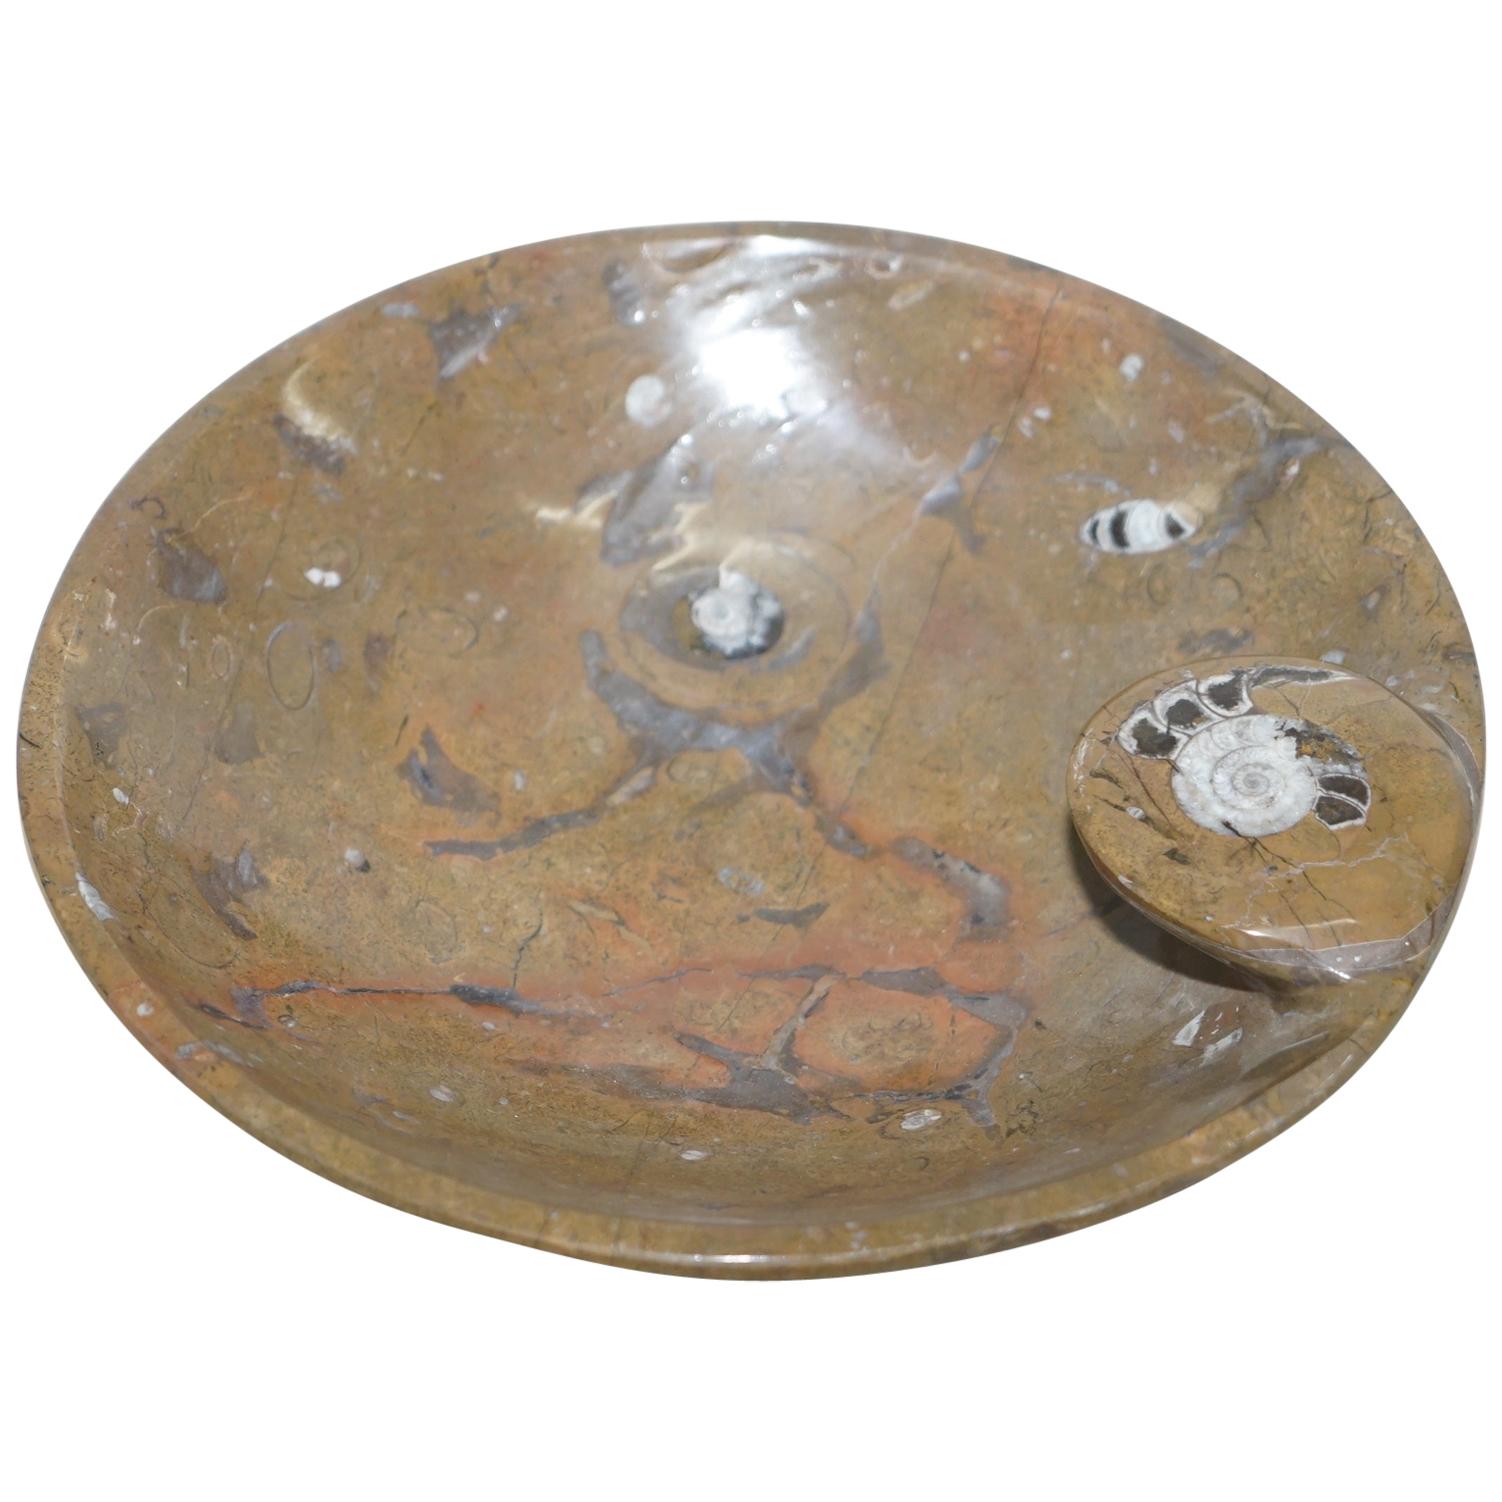 1 des 4 très rares bols fossiles marocains Ammonite Atlas Mountains en marbre finition en vente